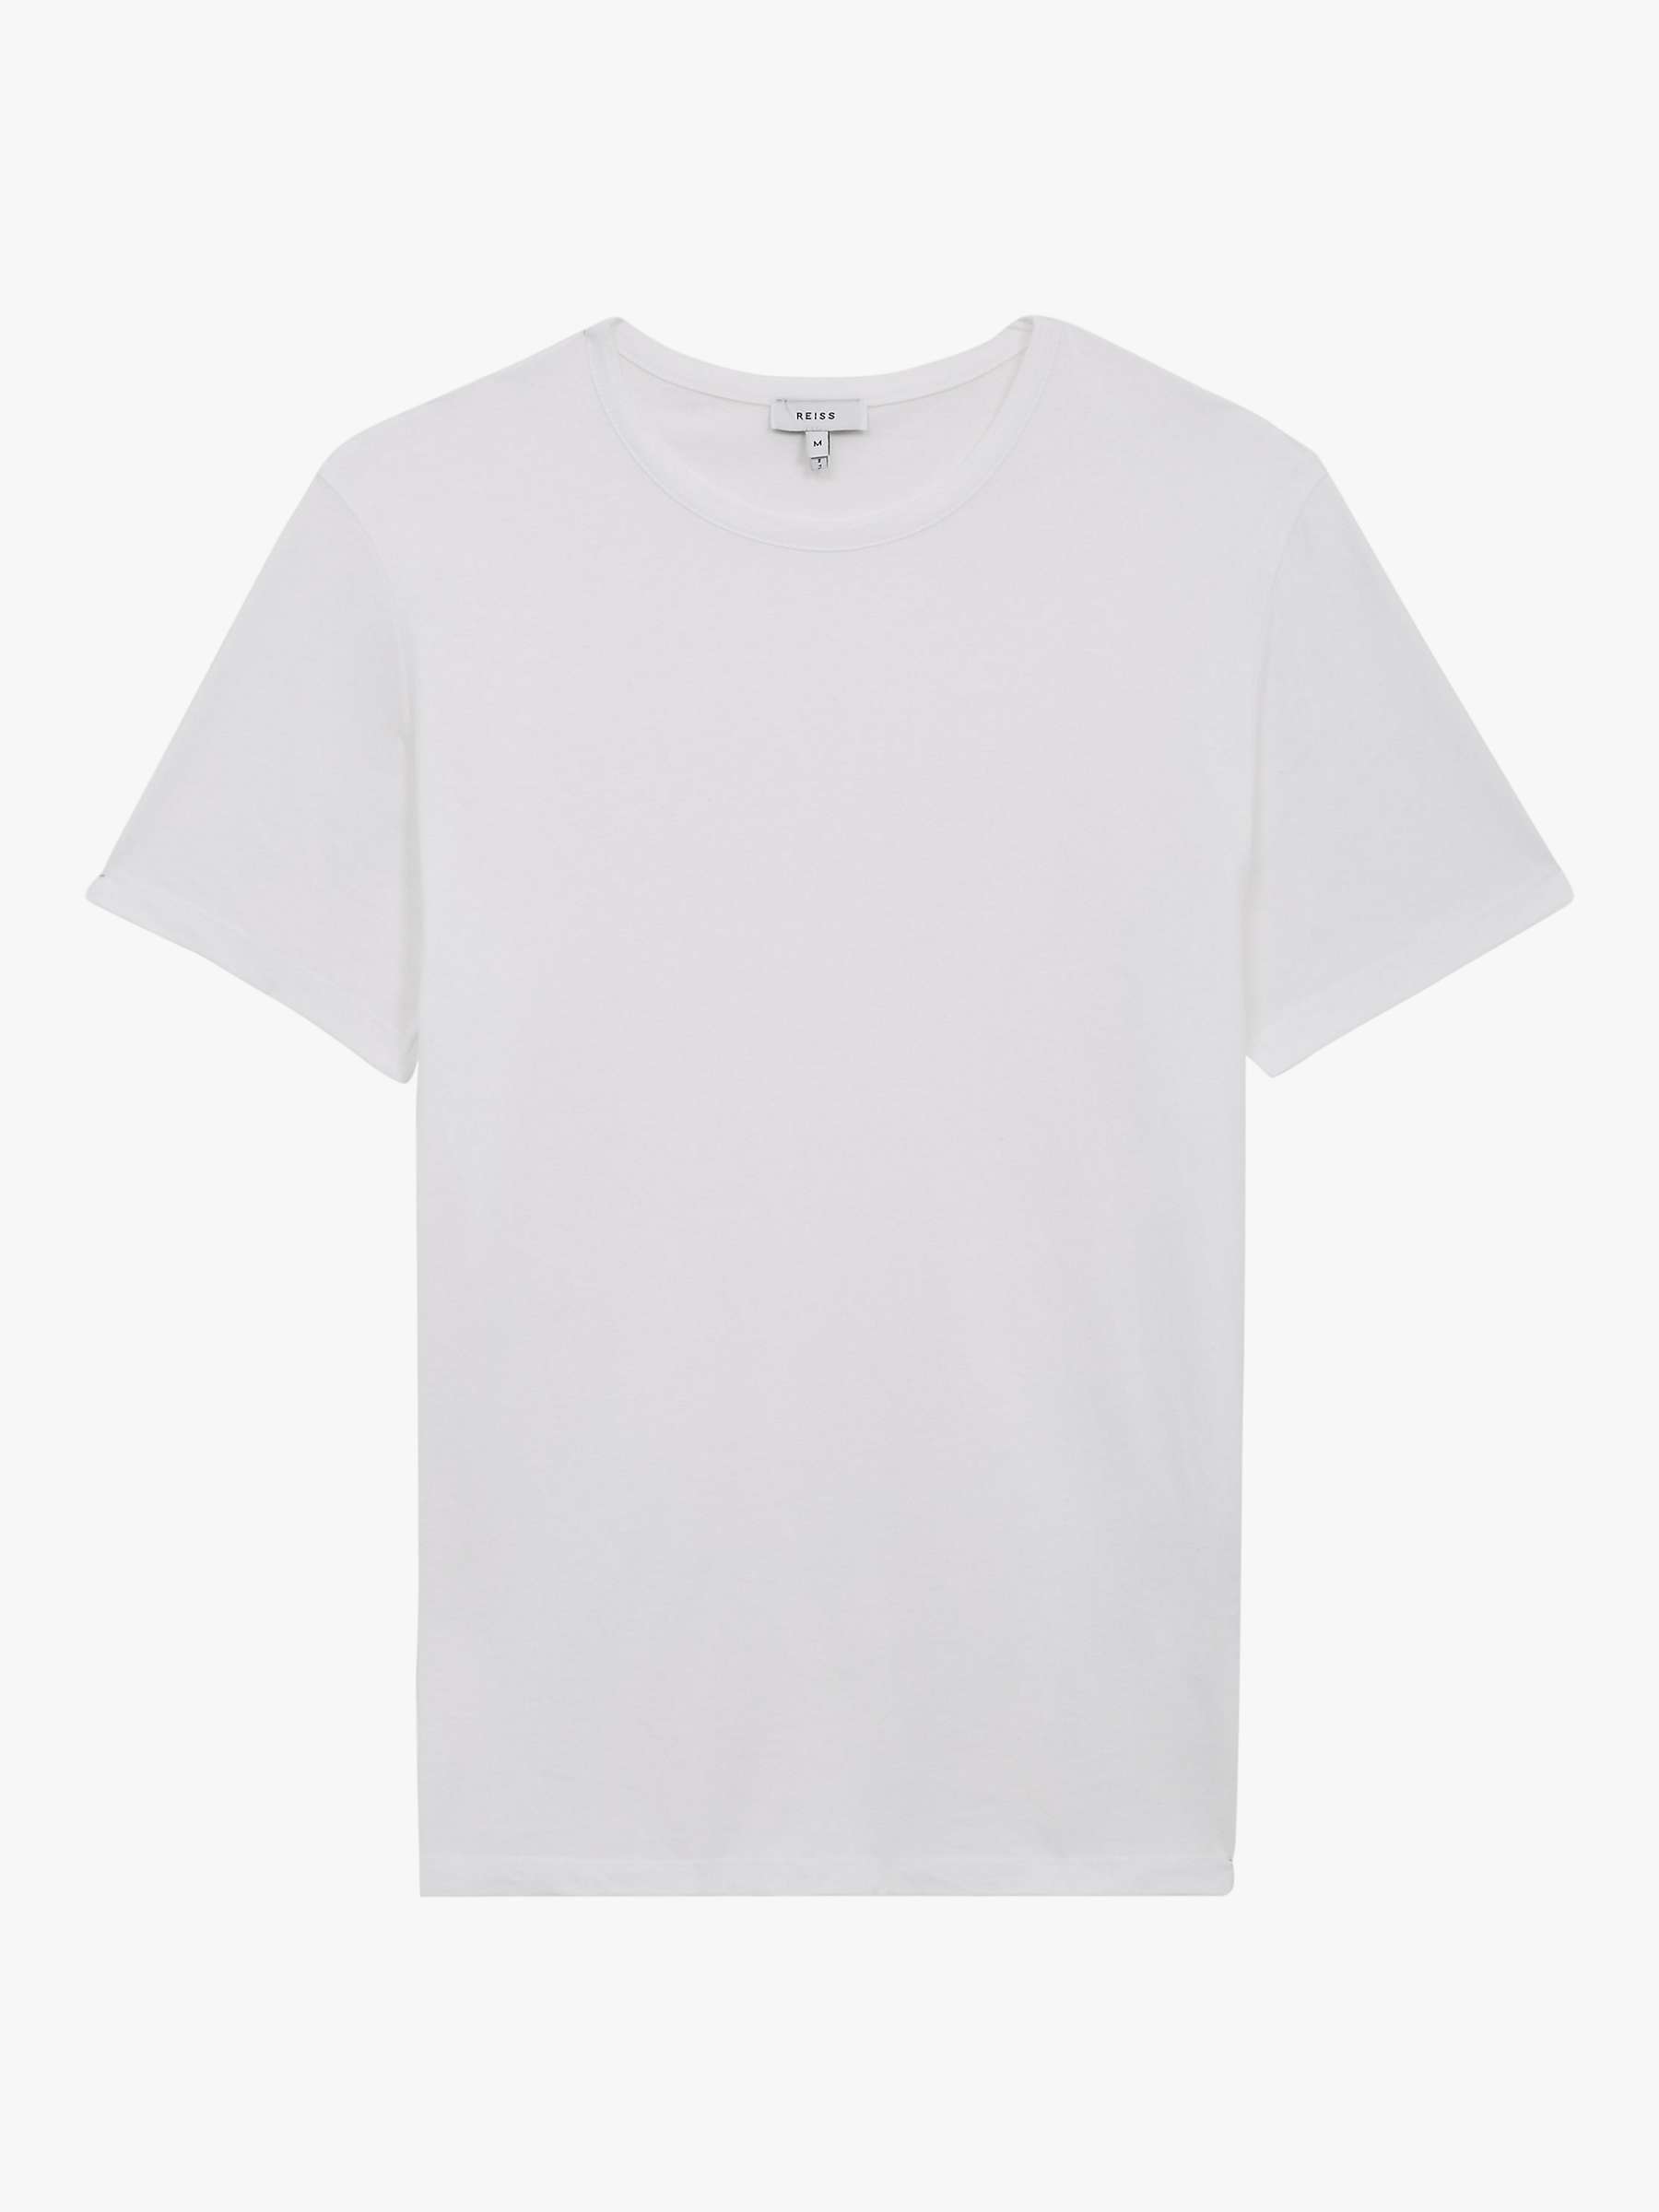 Buy Reiss Melrose Cotton Crew Neck T-Shirt Online at johnlewis.com